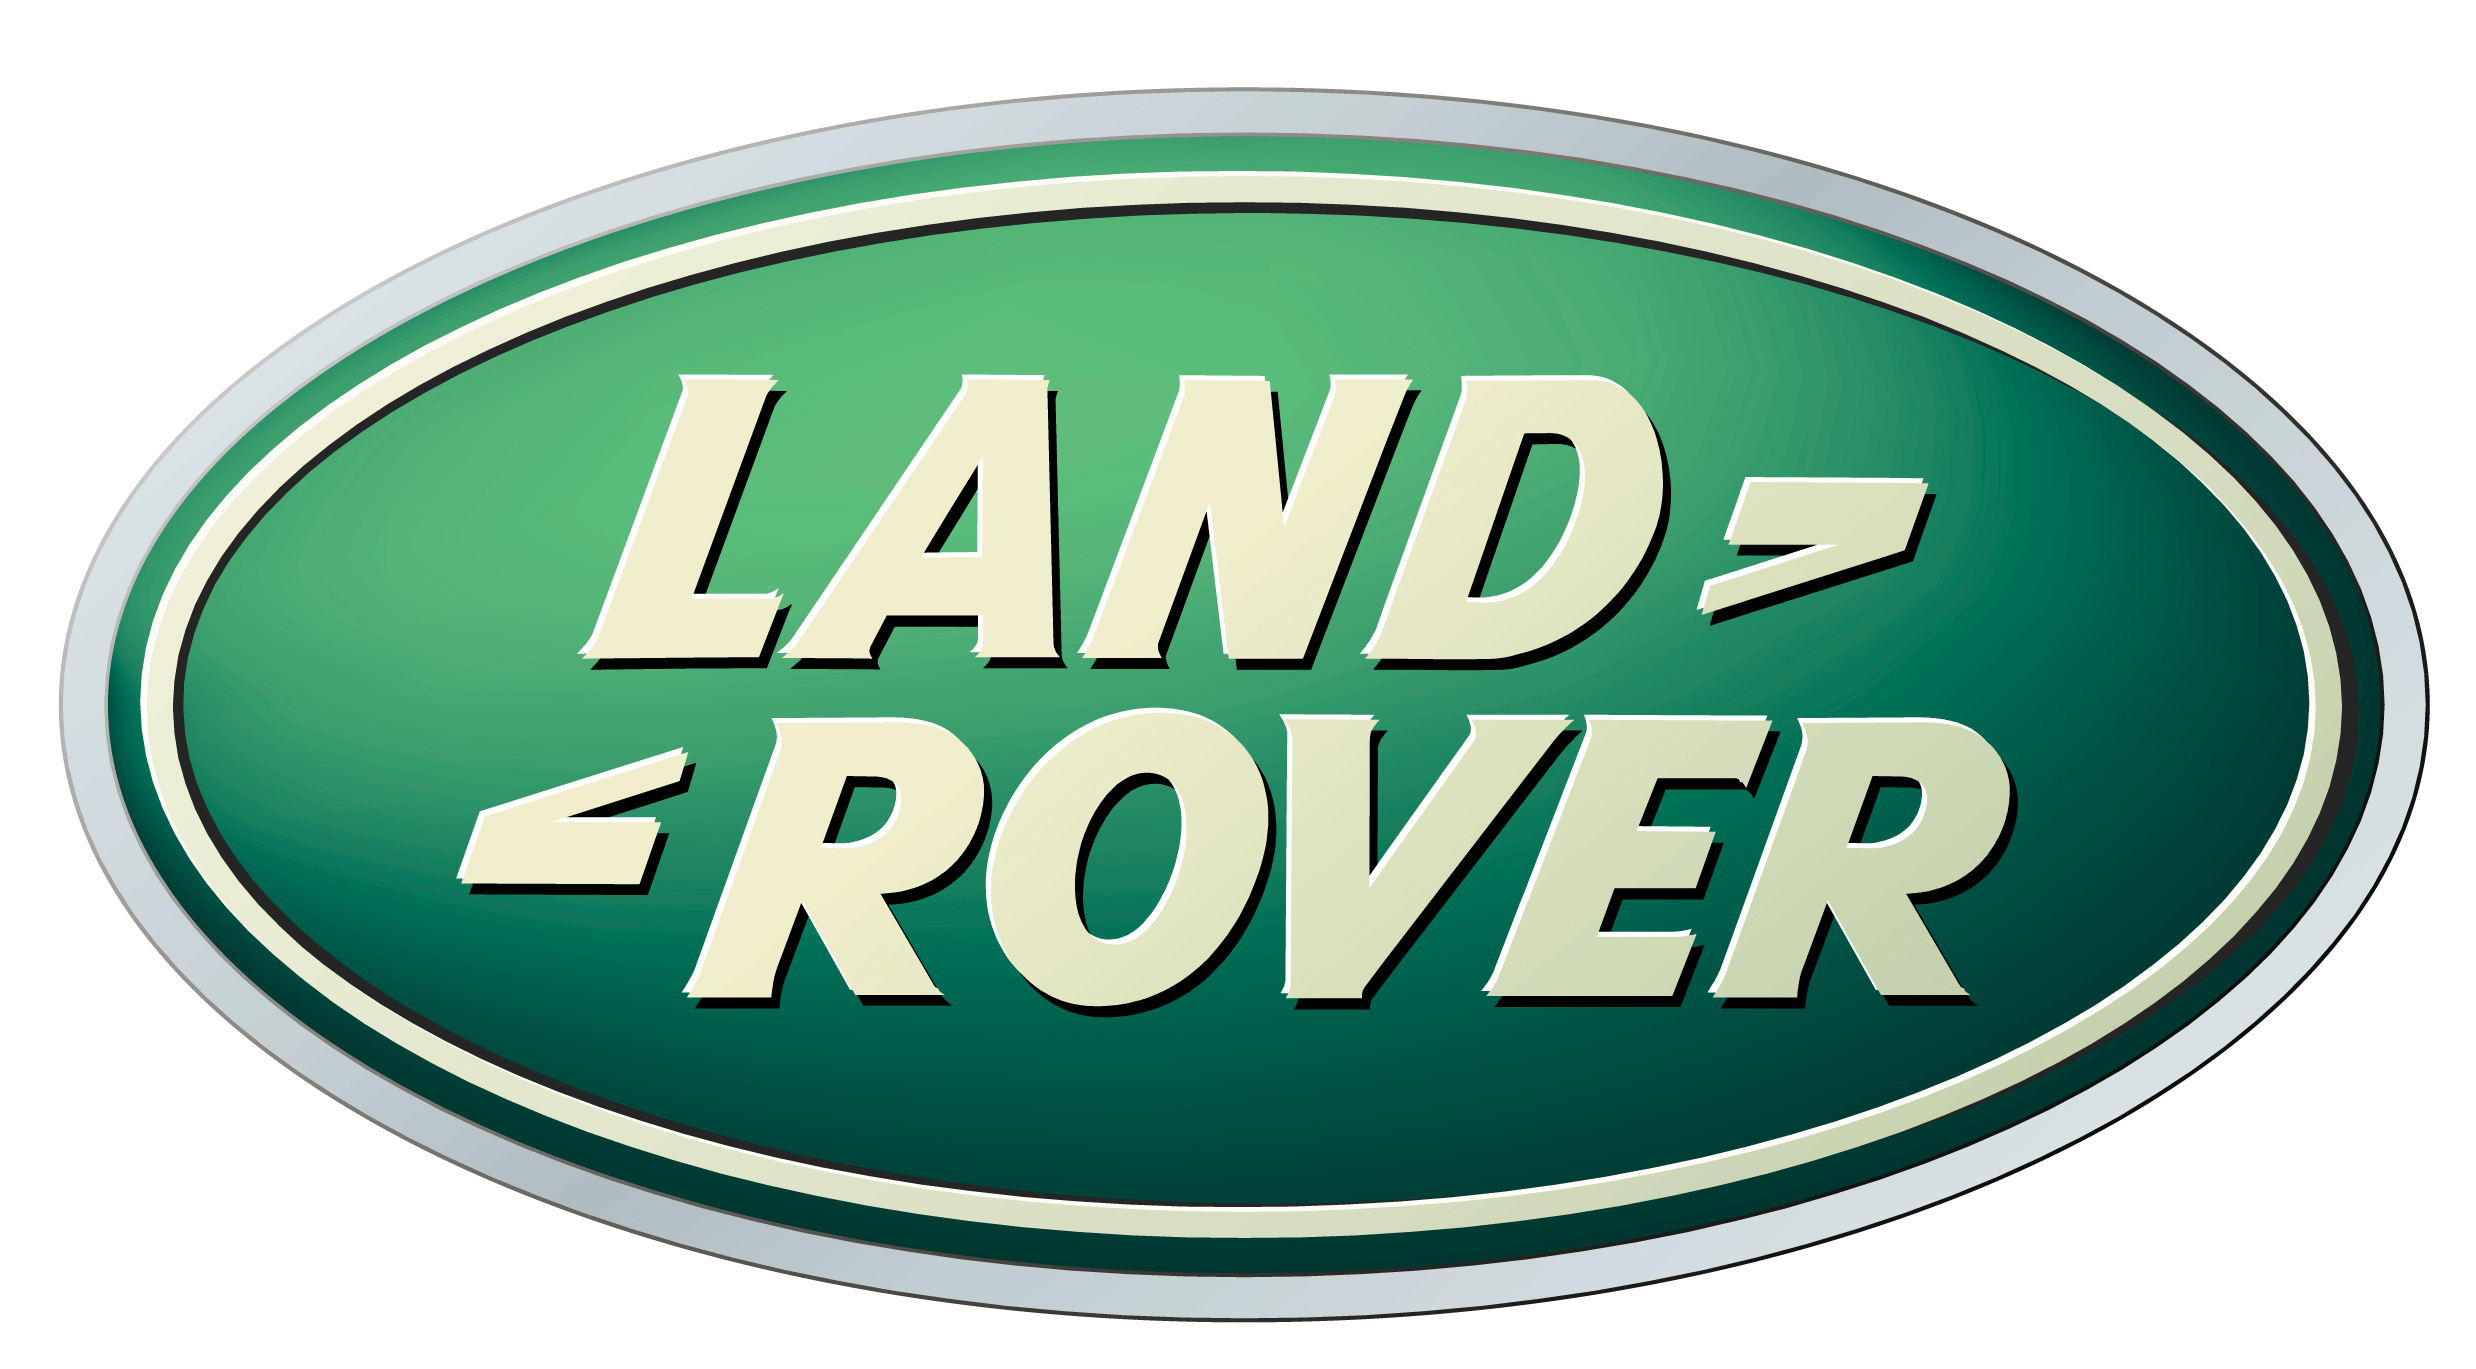 Land Rover Car Logo - Land Rover Car Logo PNG Image - PurePNG | Free transparent CC0 PNG ...